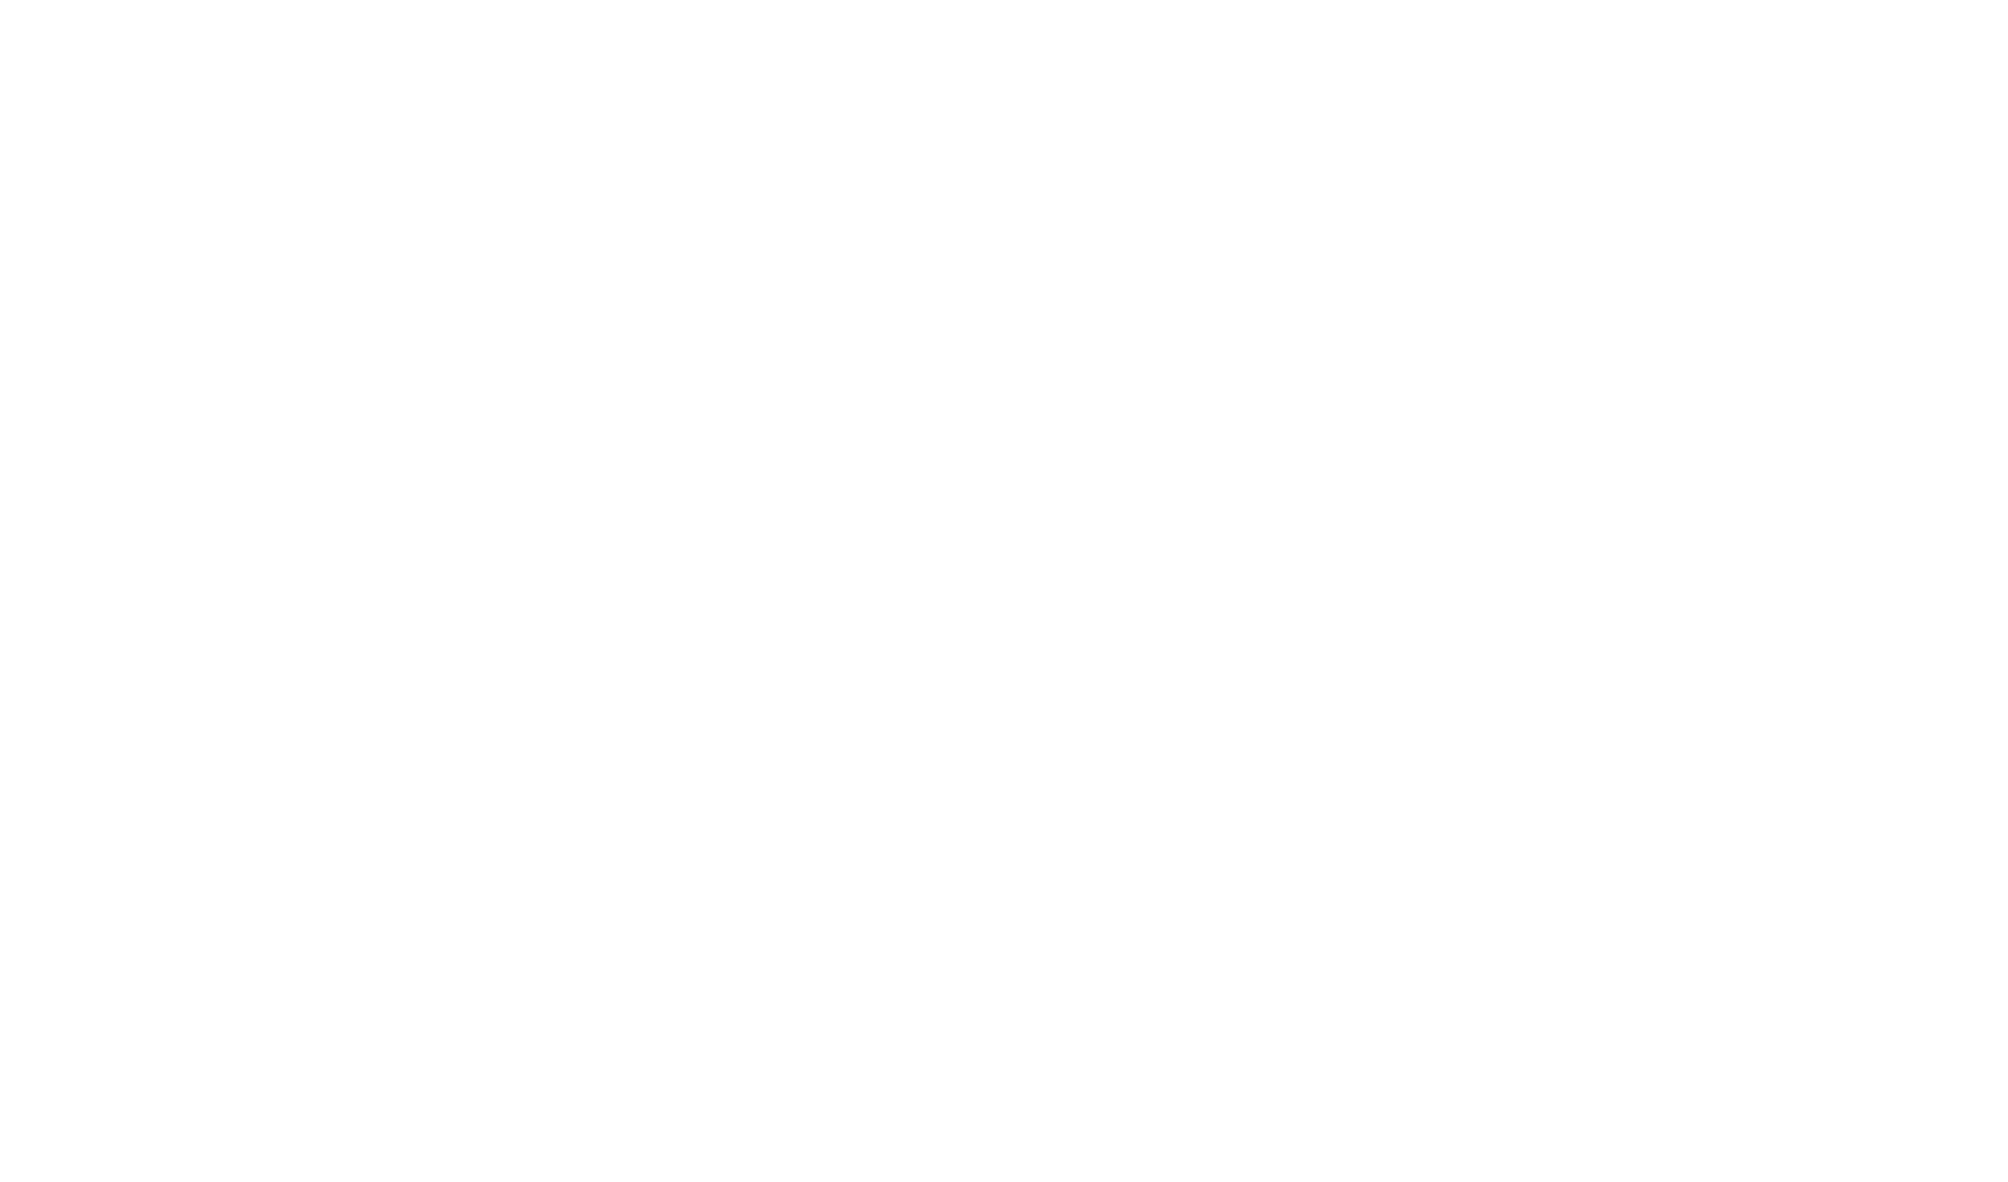 plan B Werbeagentur